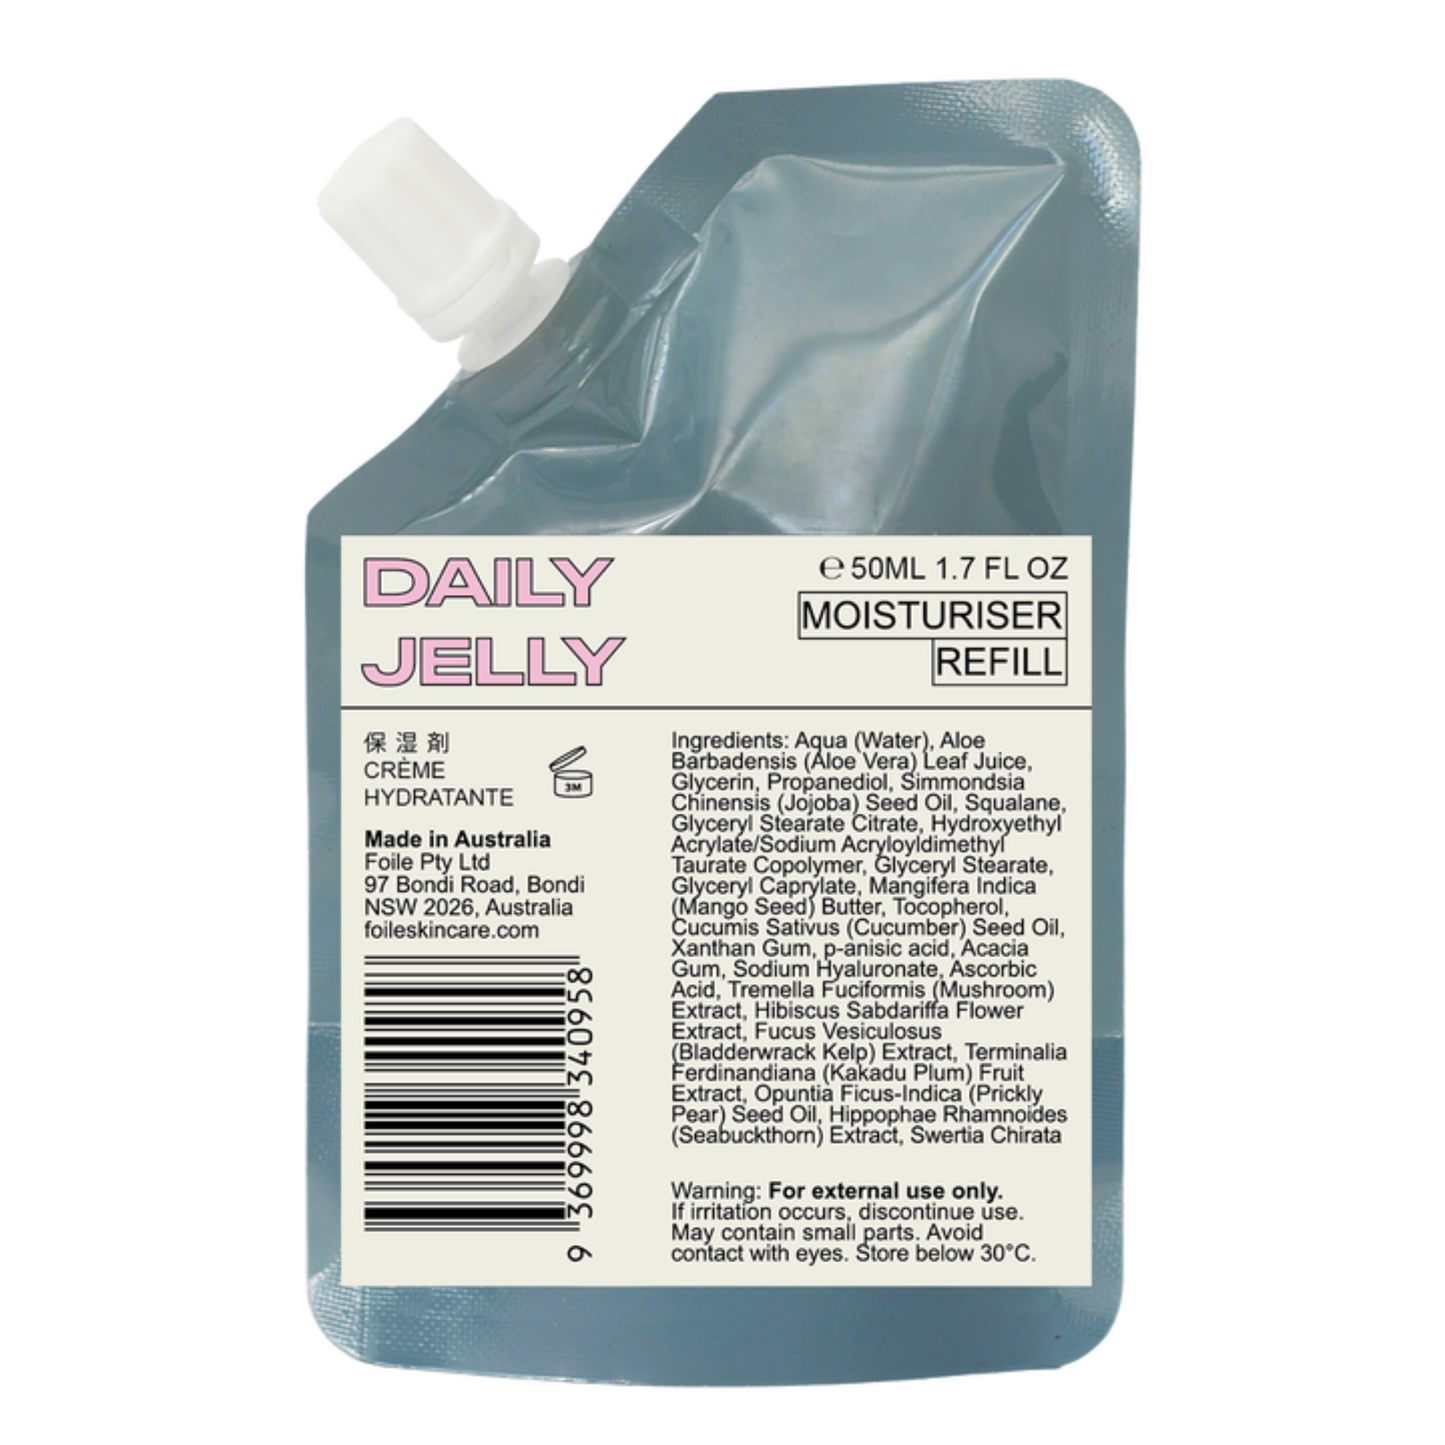 Foile Daily Jelly Moisturiser Refill